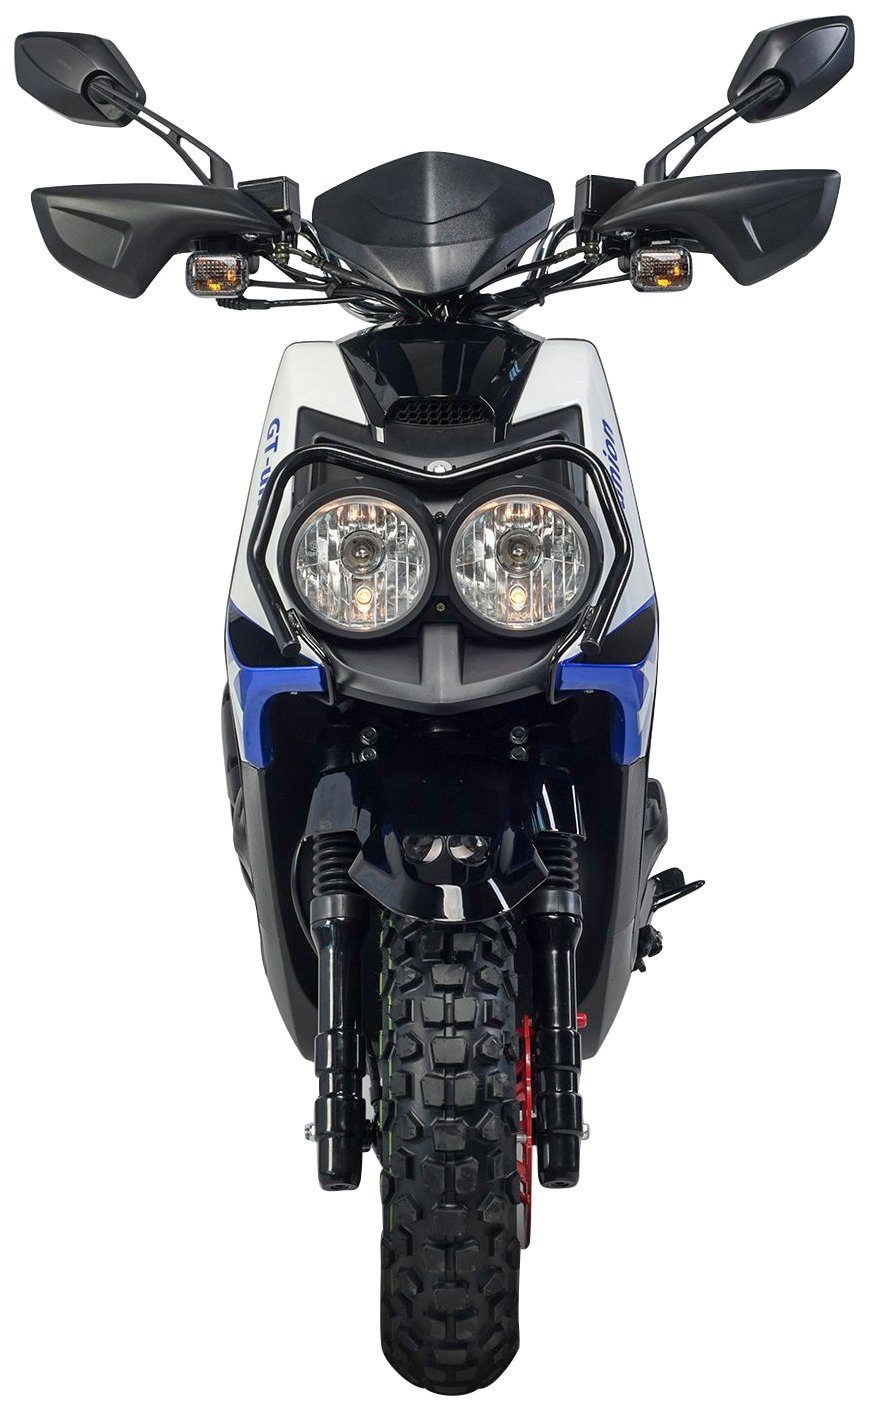 GT UNION Motorroller km/h, ccm, 45 55 weiß/blau/schwarz Cross-Concept, PX Euro 5 50